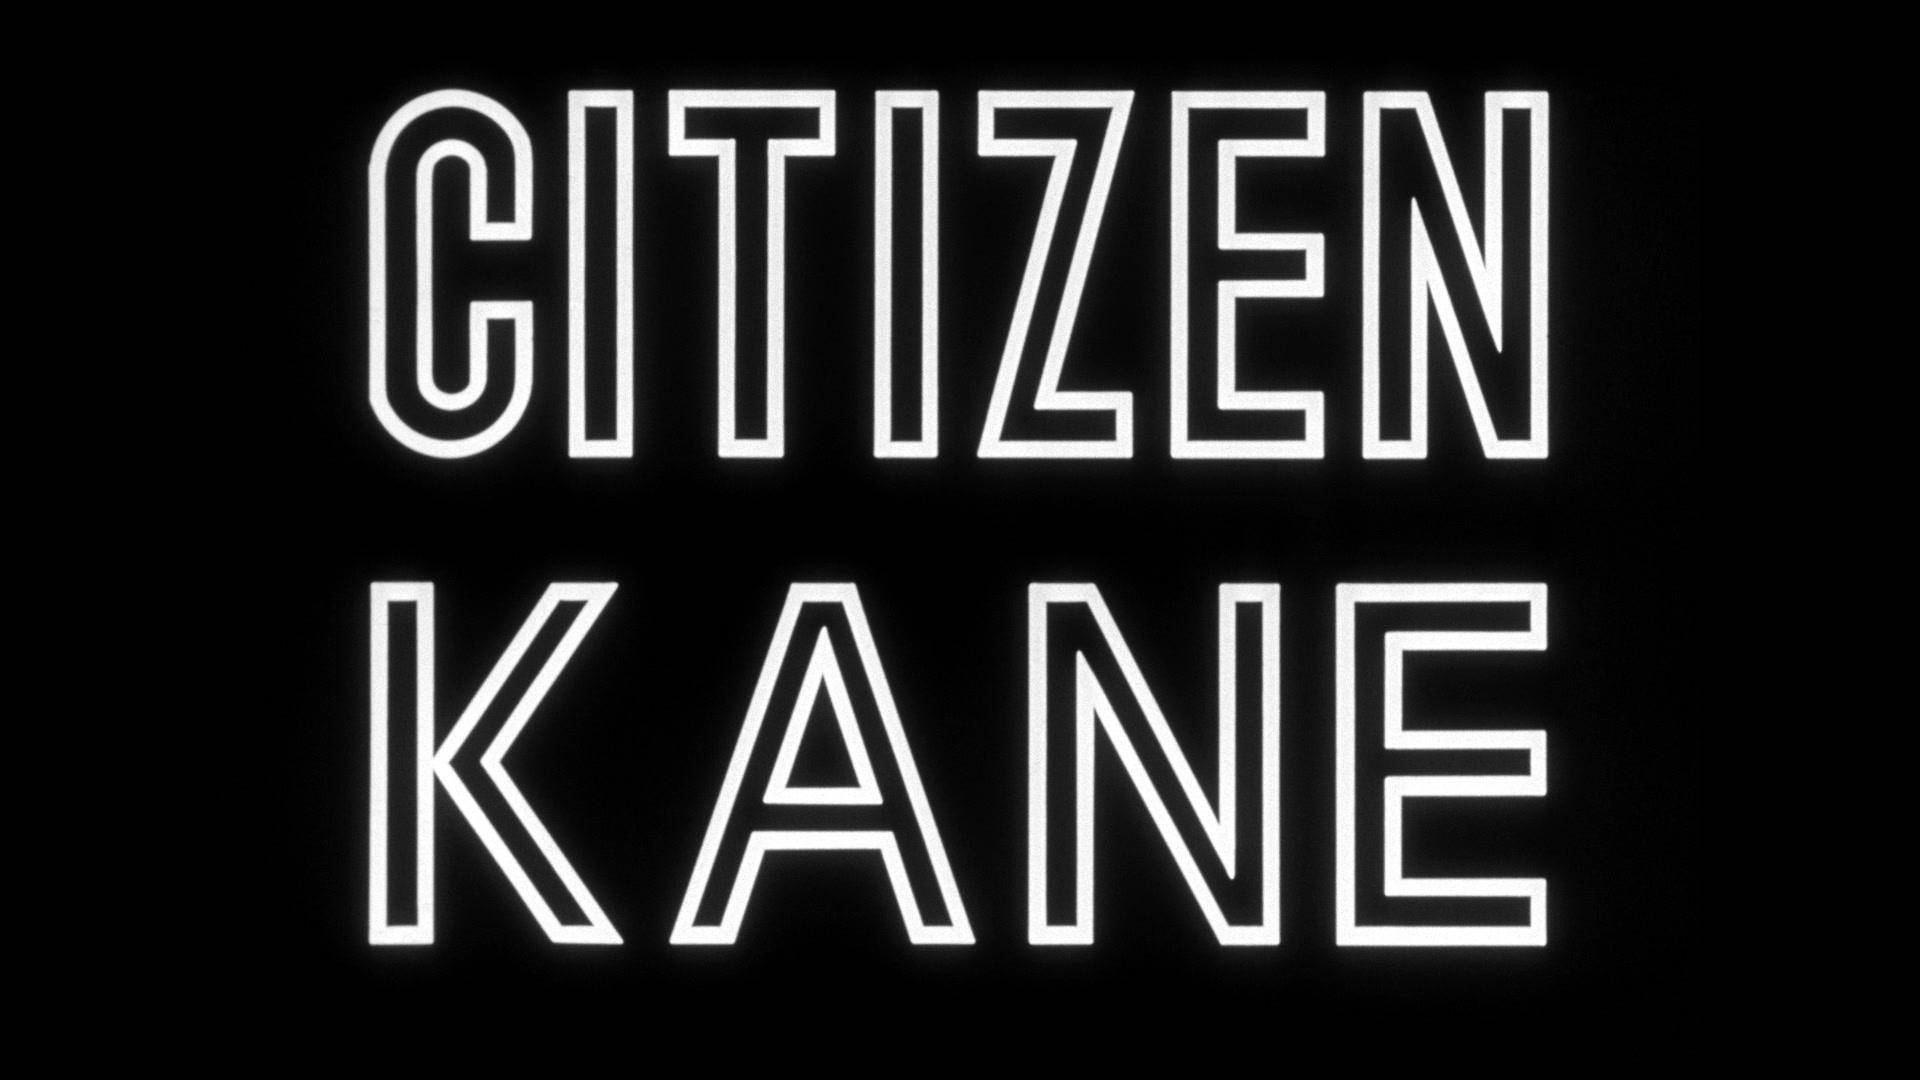 Citizen Kane Title Text Background